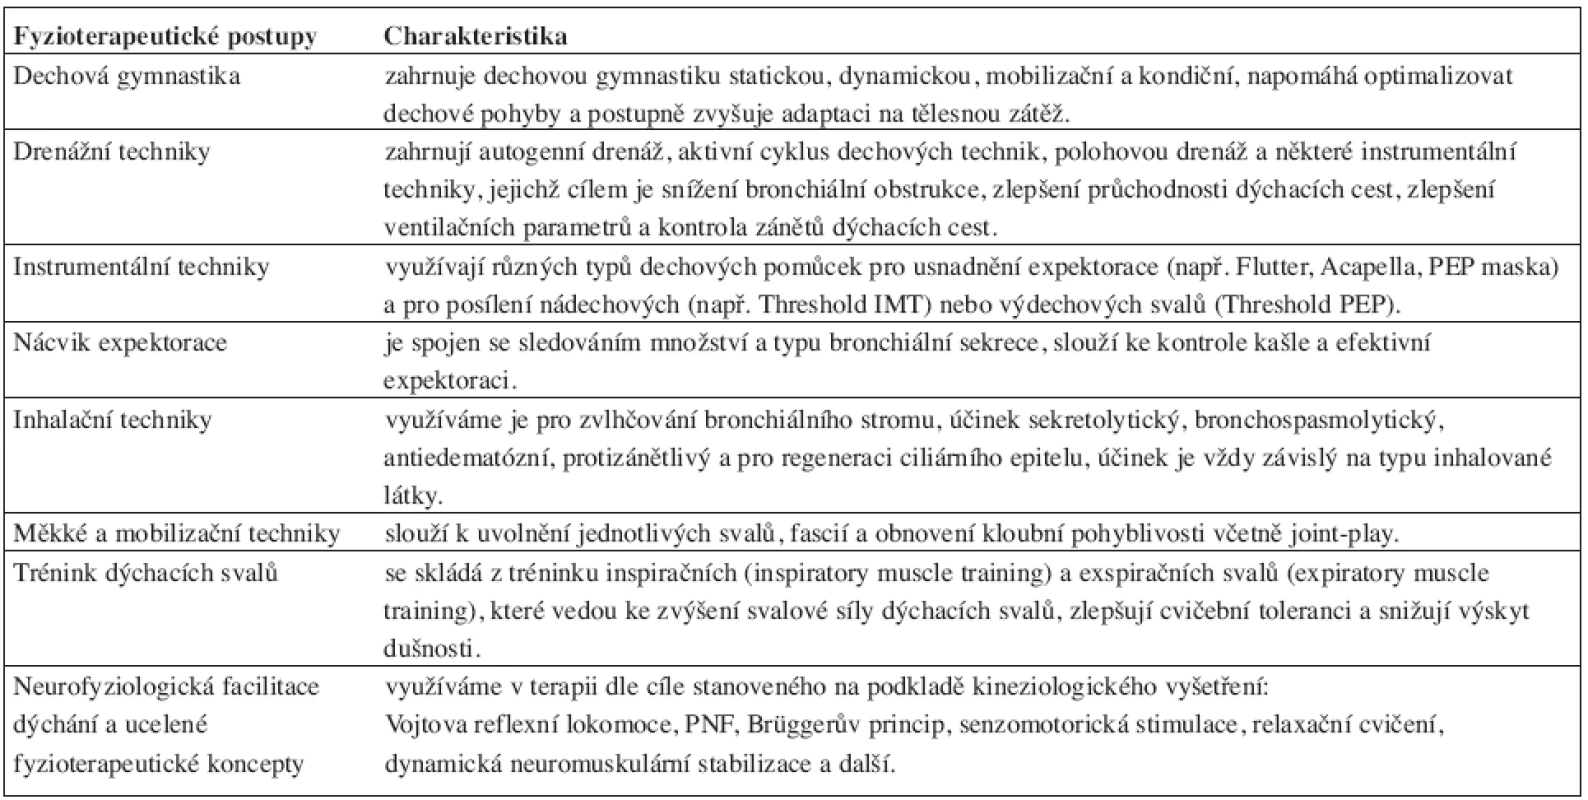 Fyzioterapeutické postupy užívané v rámci plicní rehabilitace (10, 13, 15).